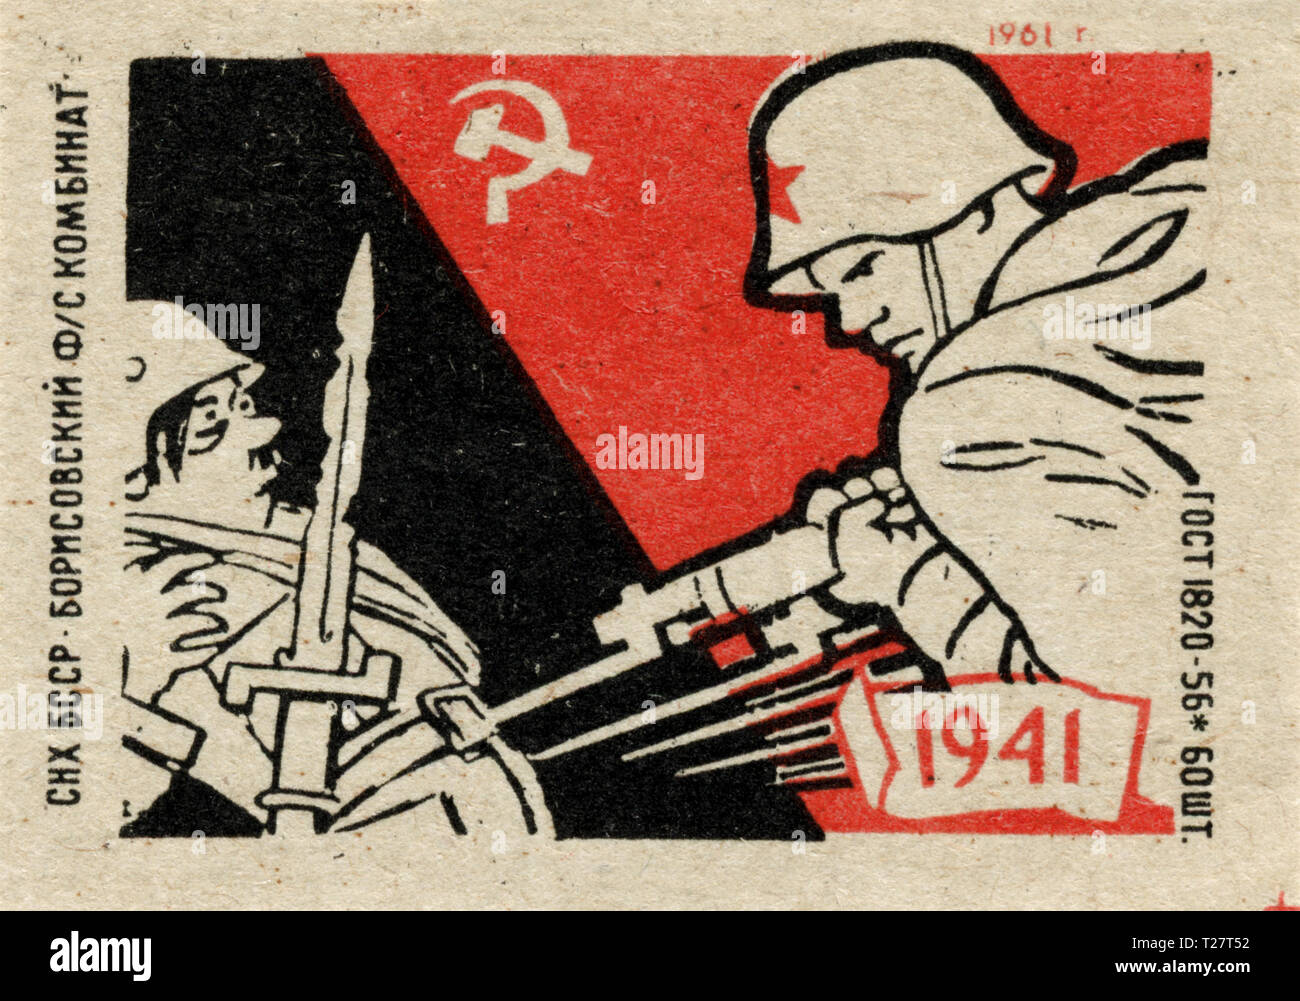 Russia - 1961: Soviet Union propaganda, matchbox graphics, WW2 victory Stock Photo